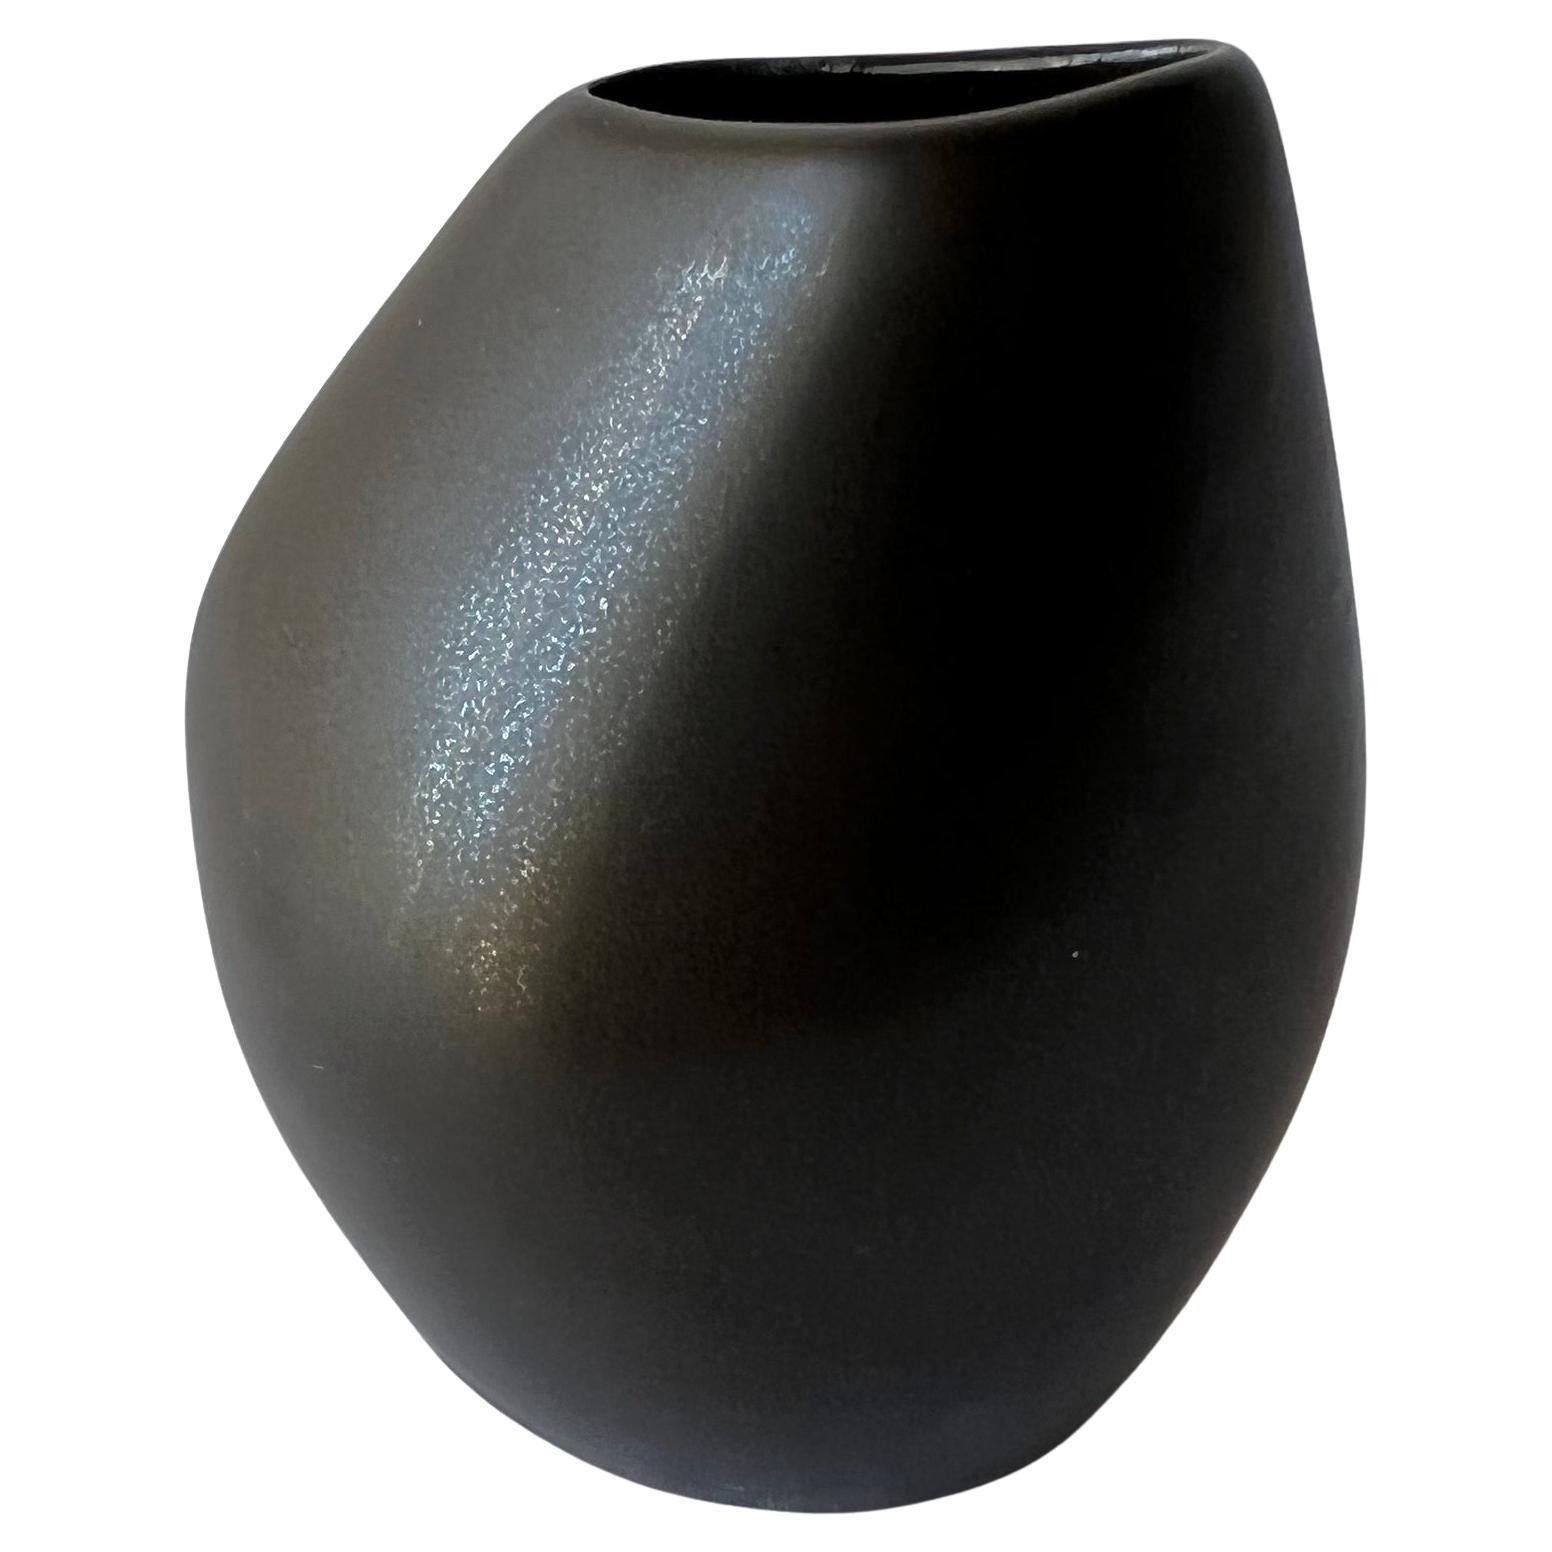 Lillemor Mannerheim Upsala Ekeby Swedish Modernist Mangania Stoneware Vase For Sale